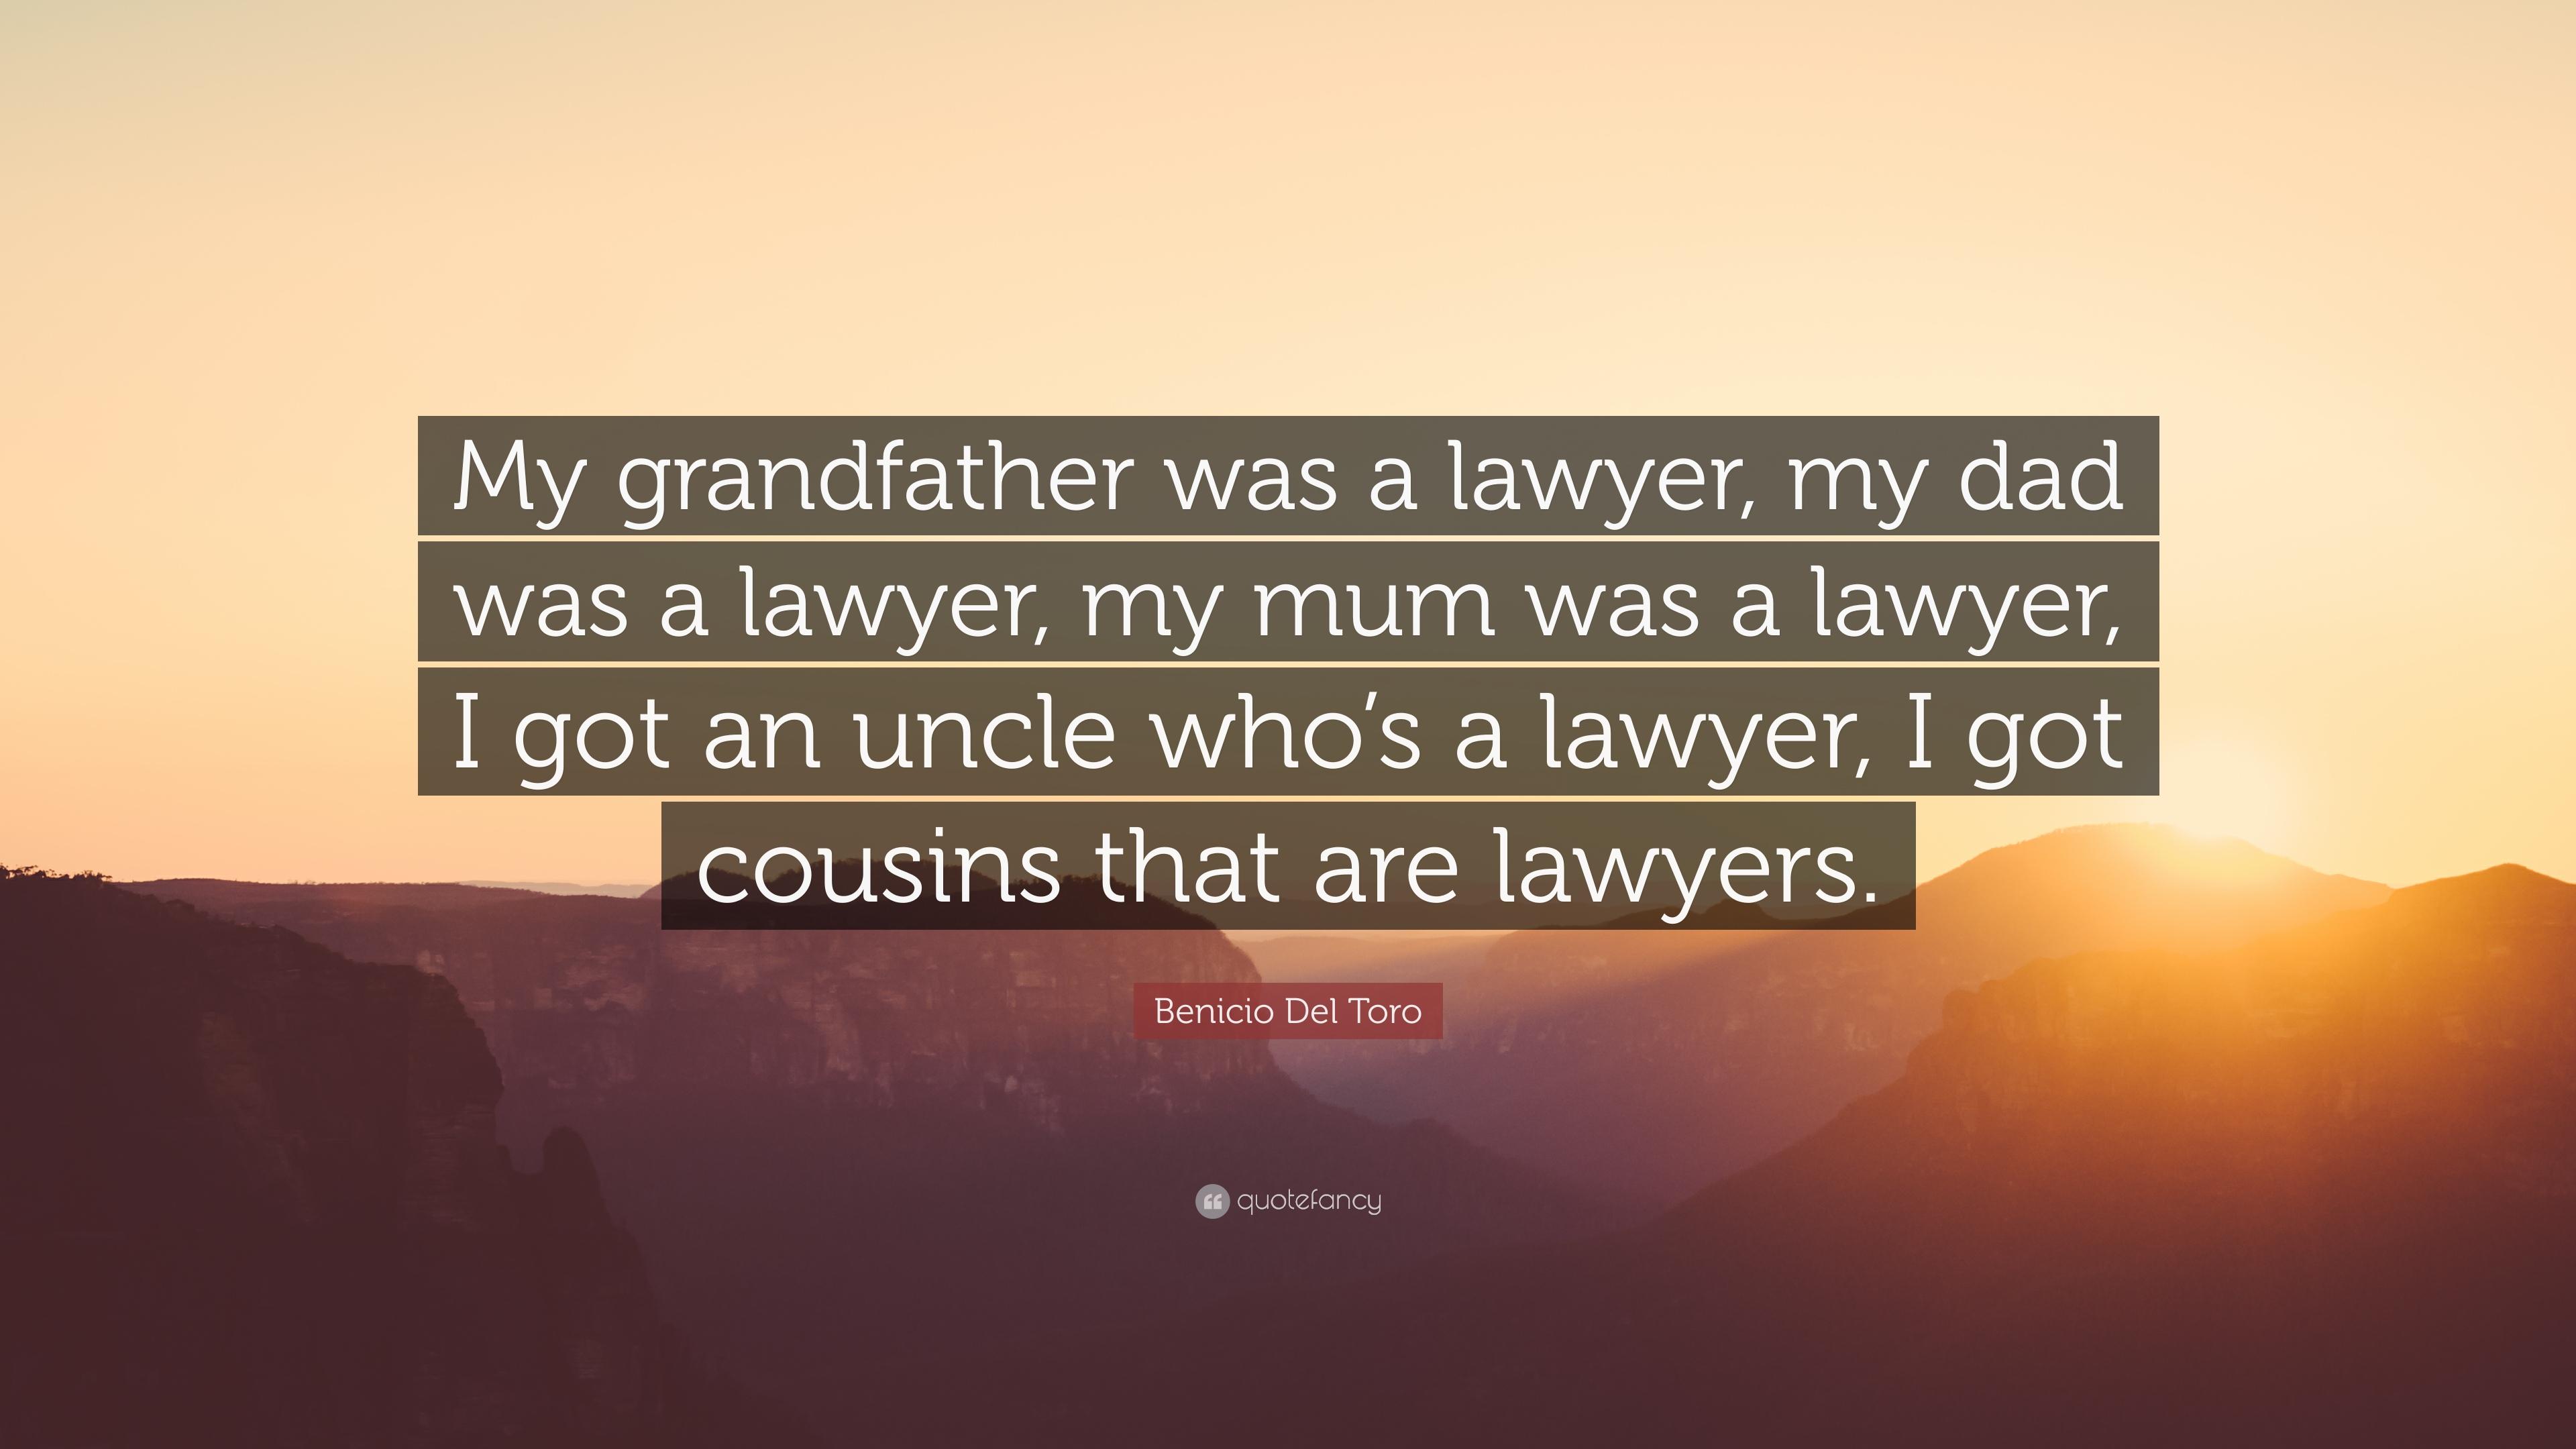 Benicio Del Toro Quote: “My grandfather was a lawyer, my dad was a